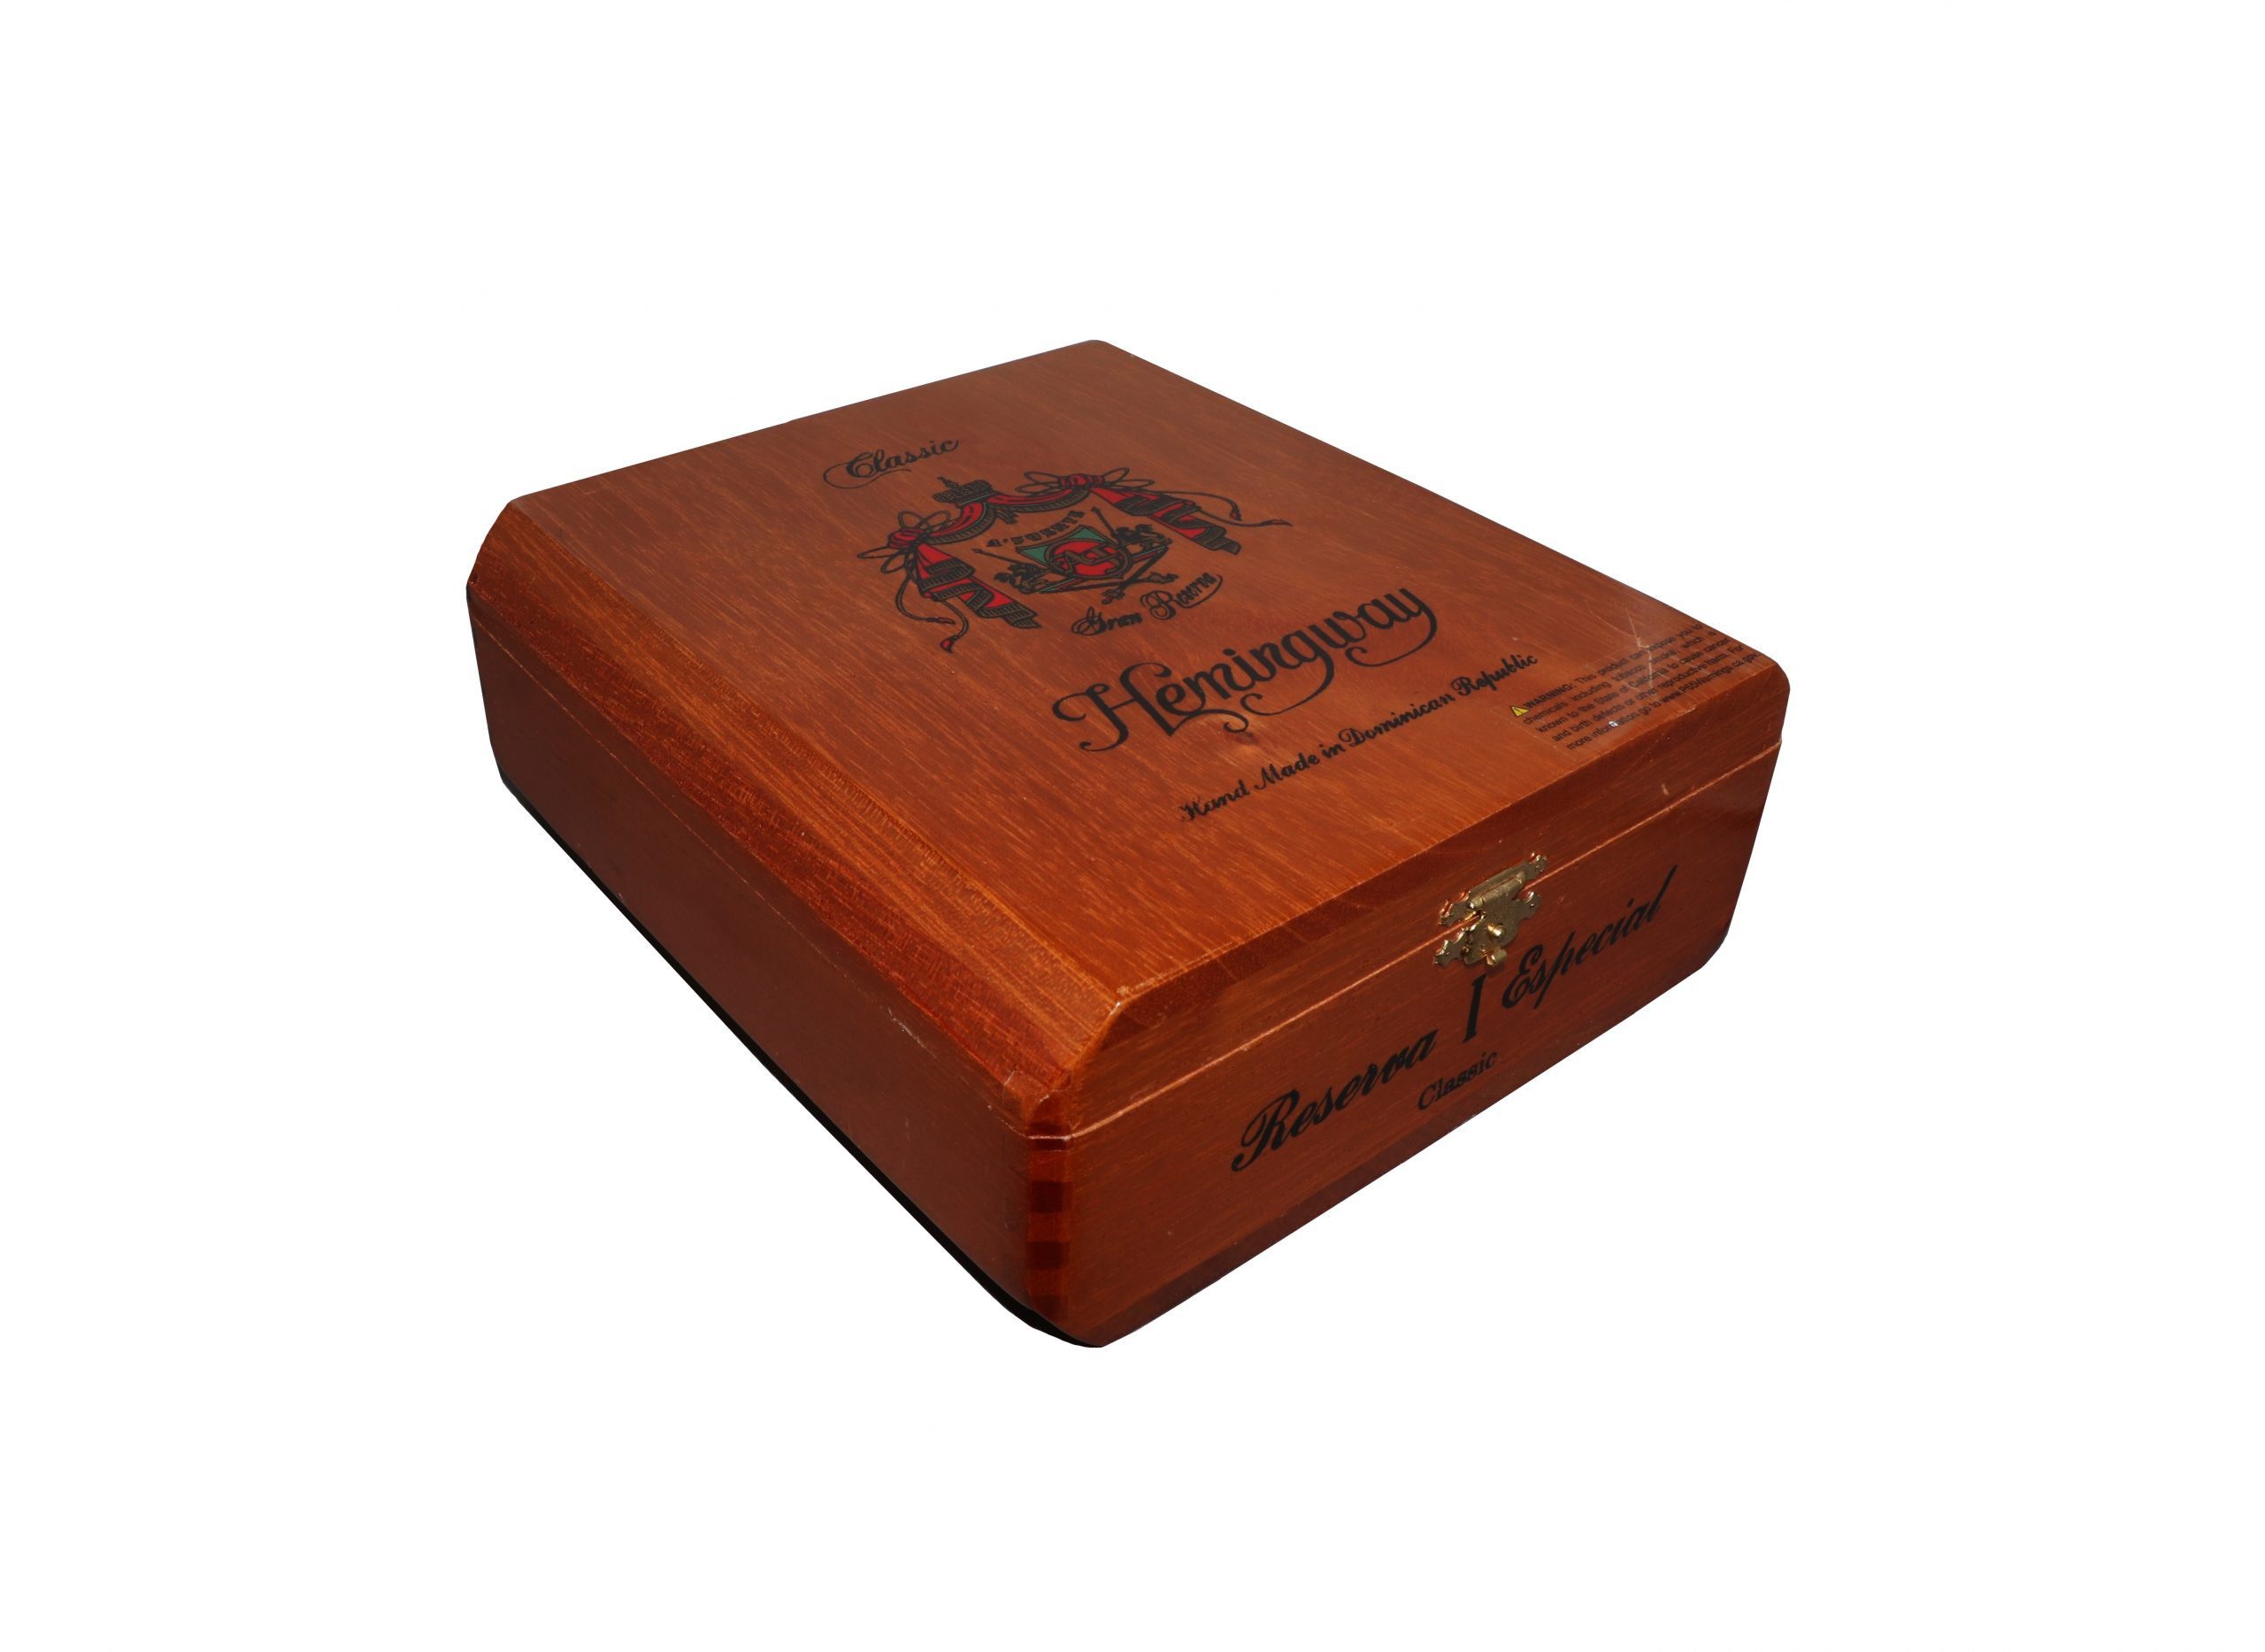 Closed box of 25 count Arturo Fuente Hemingway Classic cigars